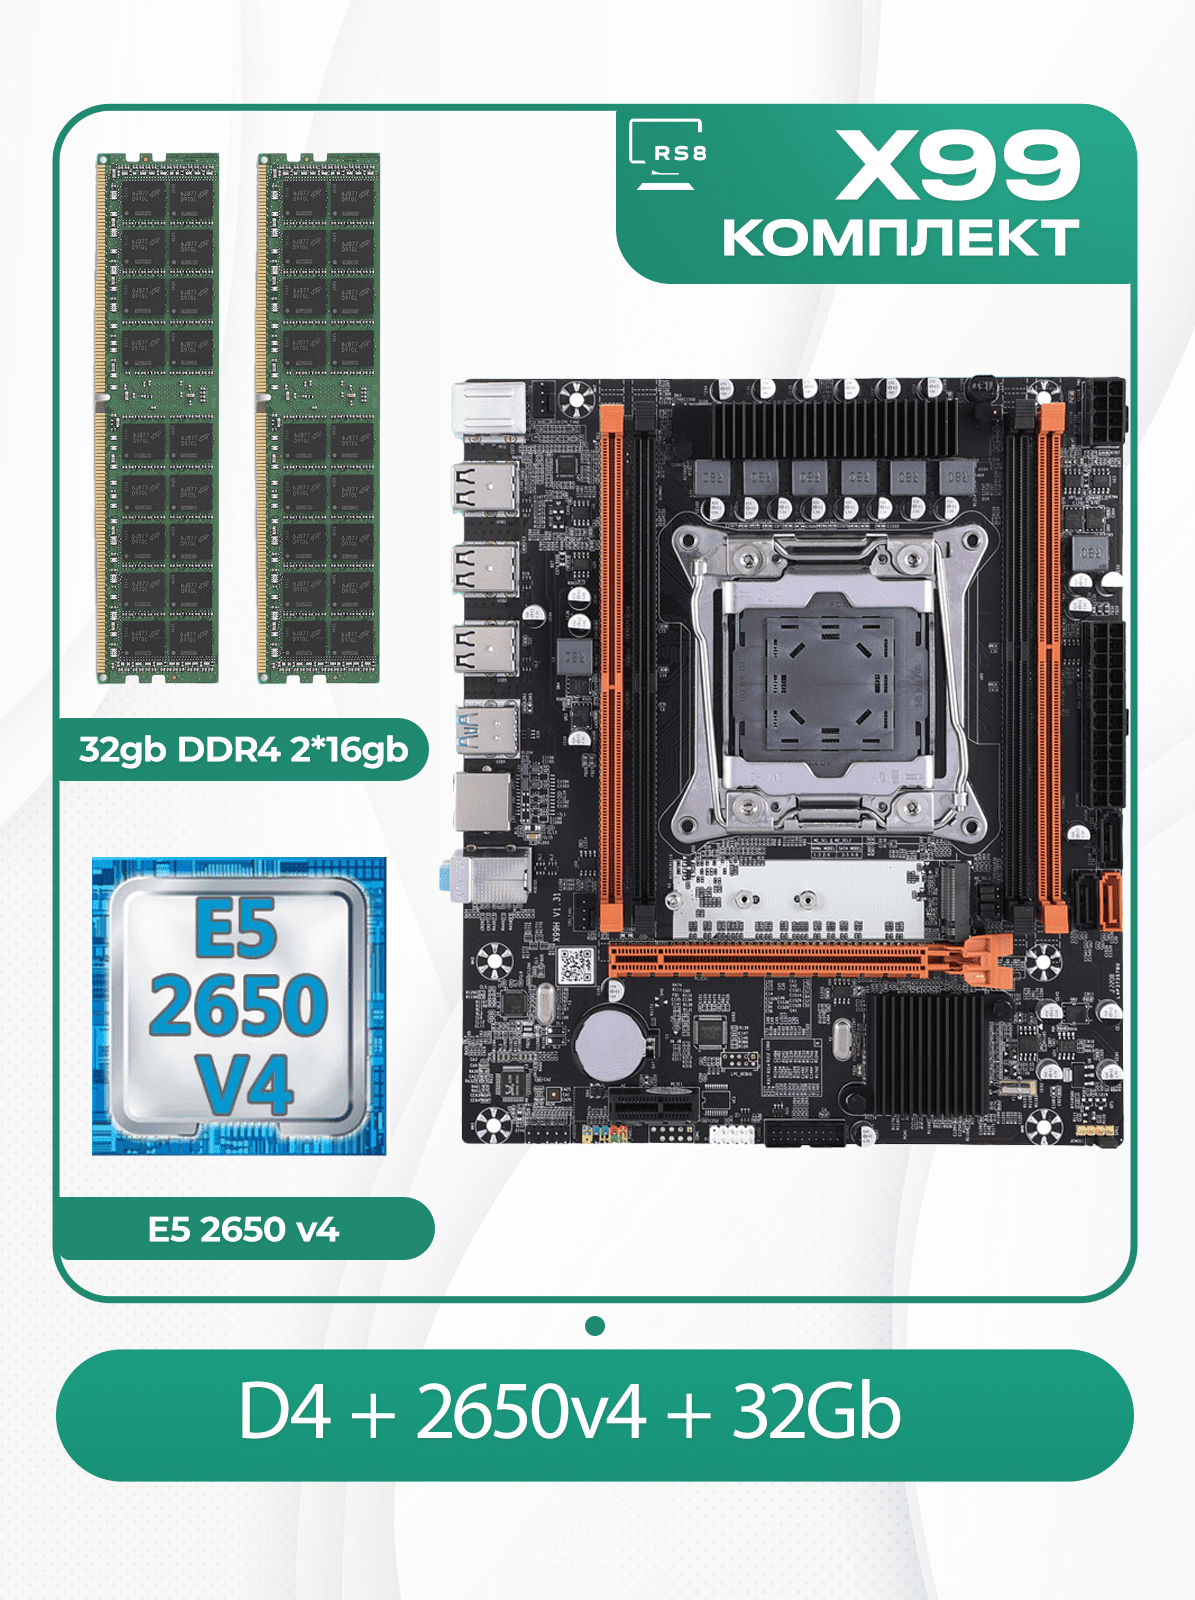 Комплект материнской платы X99: Atermiter D4 2011v3 + Xeon E5 2650v4 + DDR4